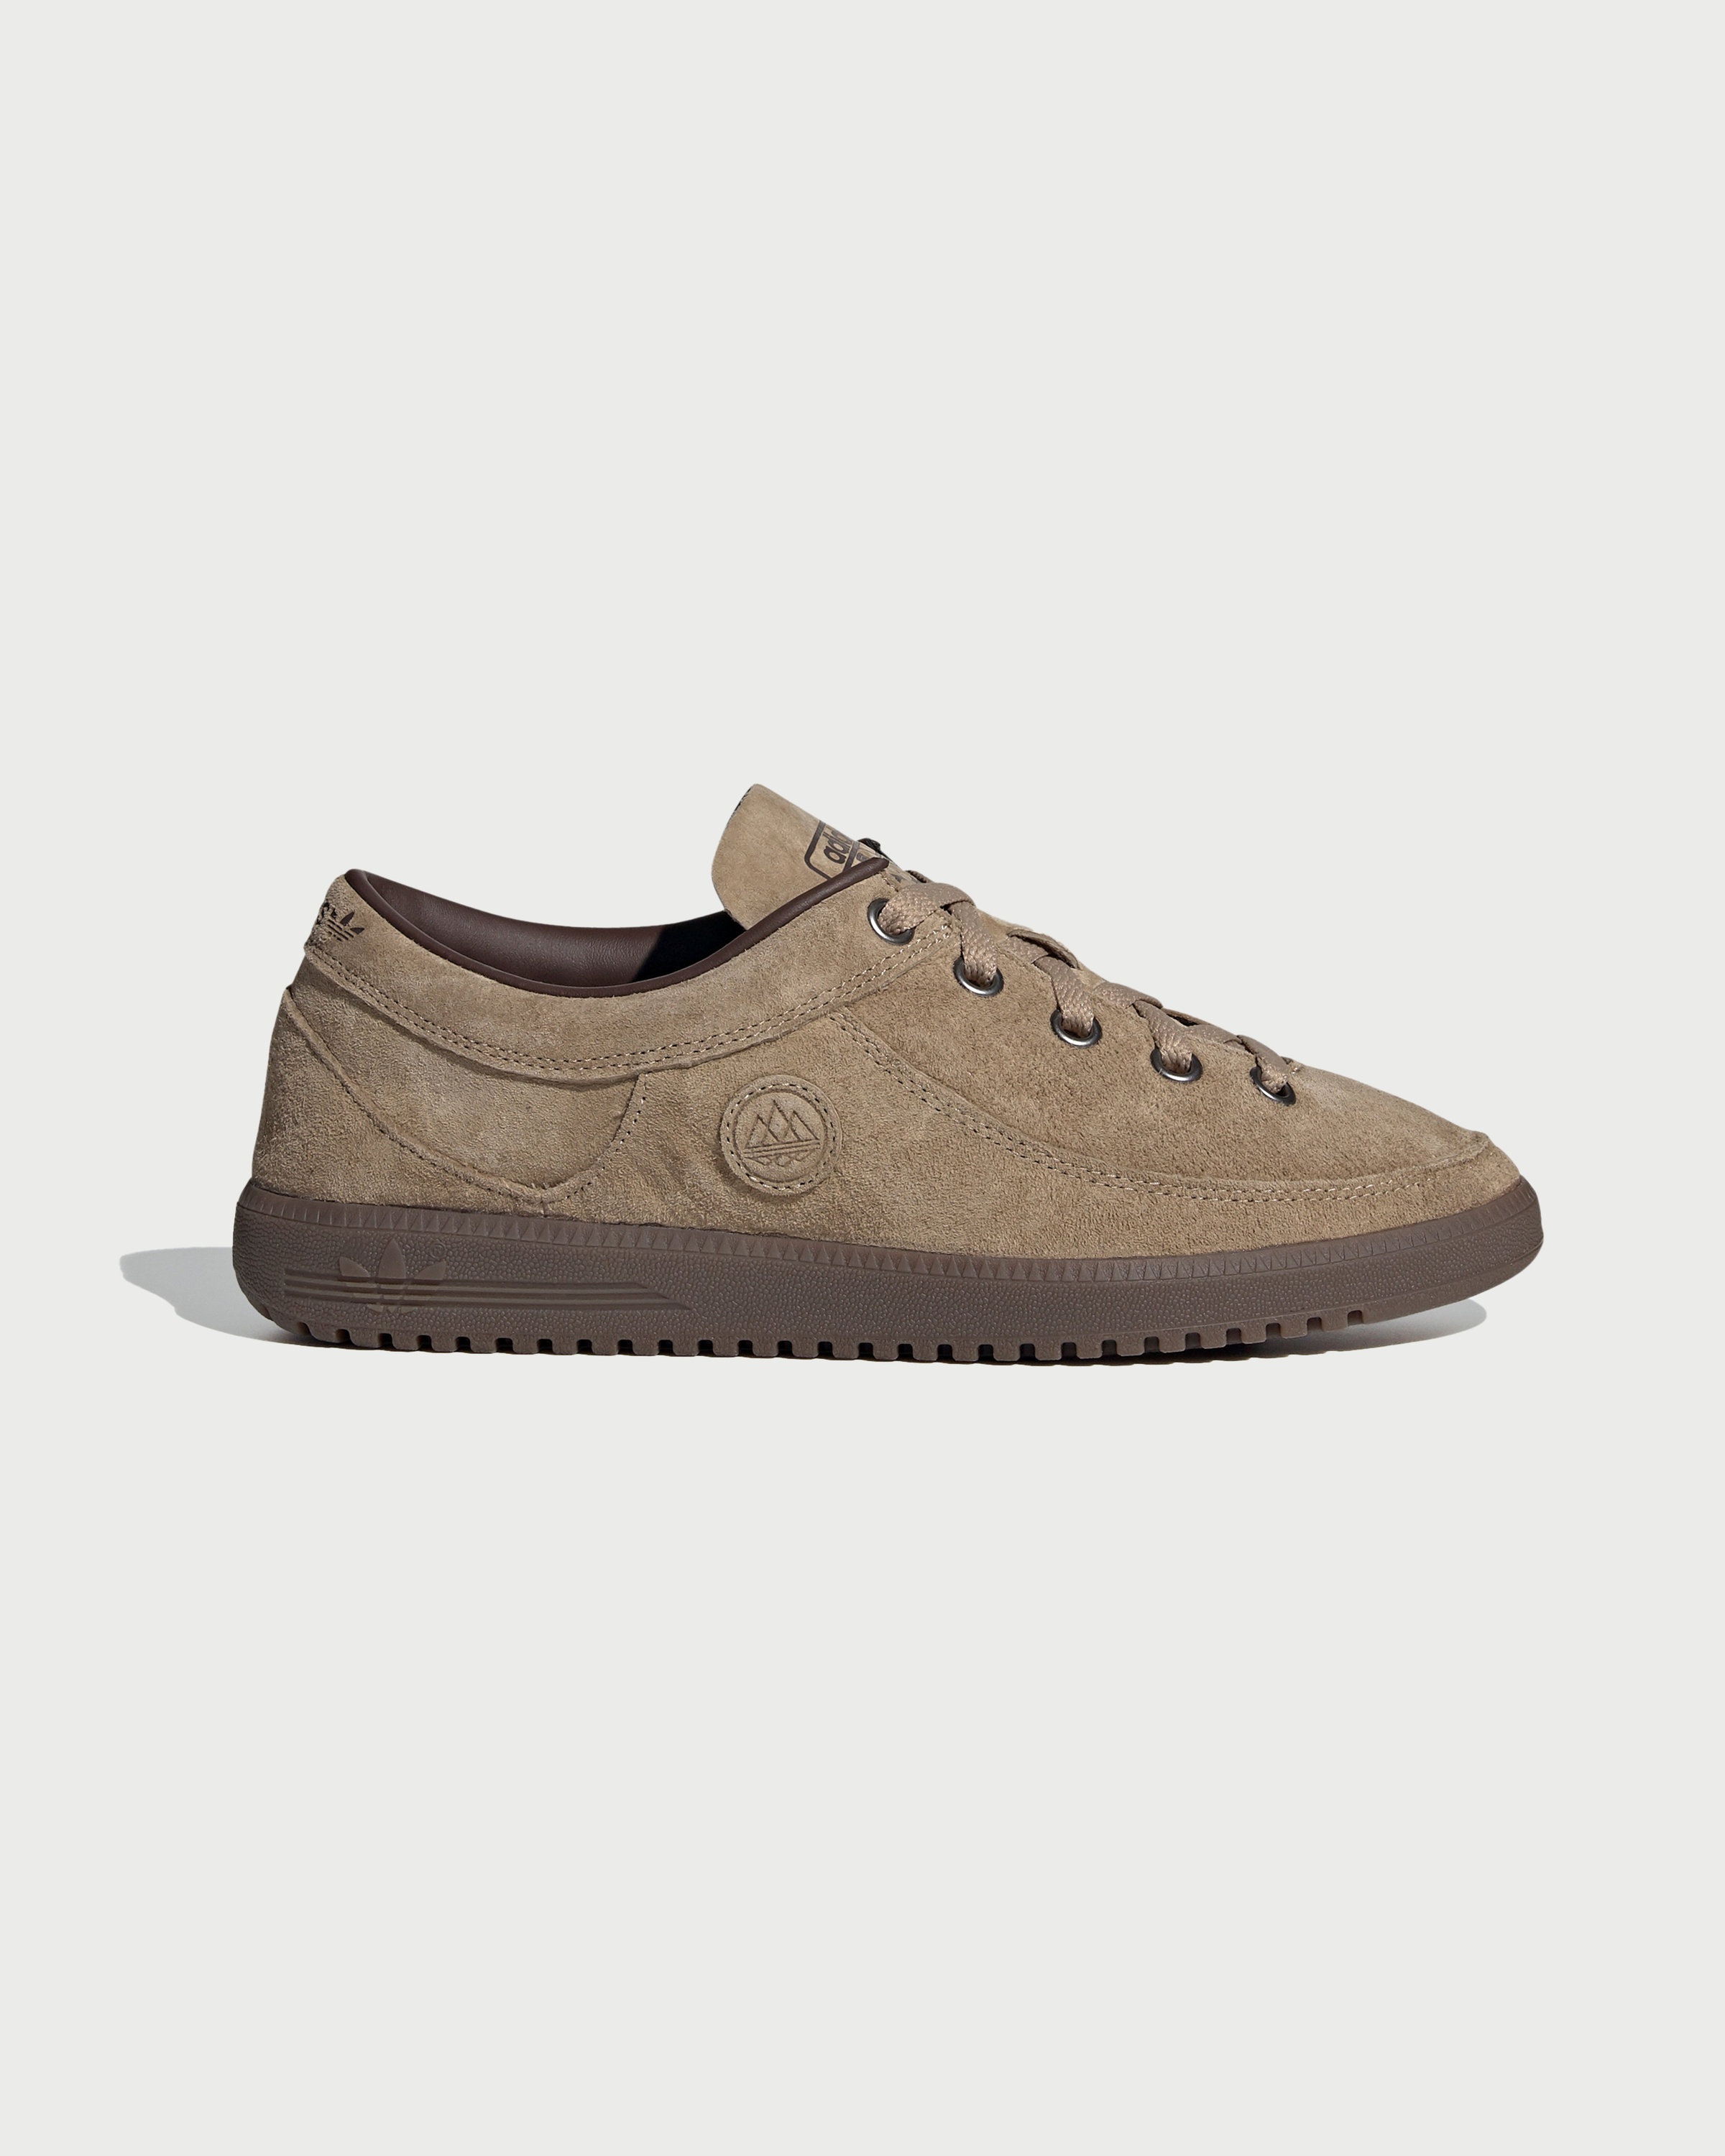 Adidas – Newrad Spezial Brown - Sneakers - Brown - Image 1